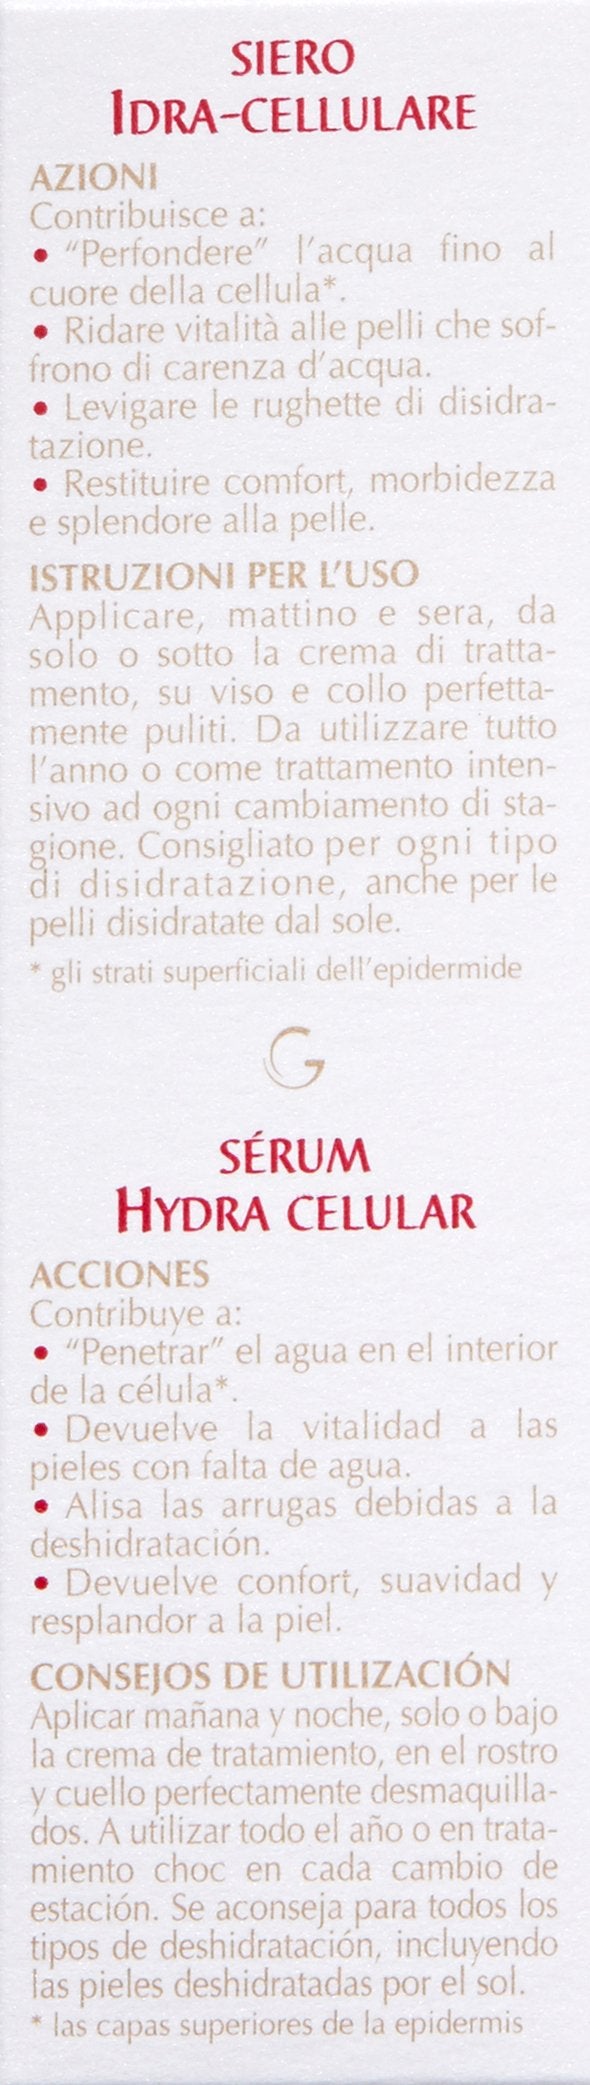 [Australia] - Guinot Hydra Cellulaire Serum 30 ml 